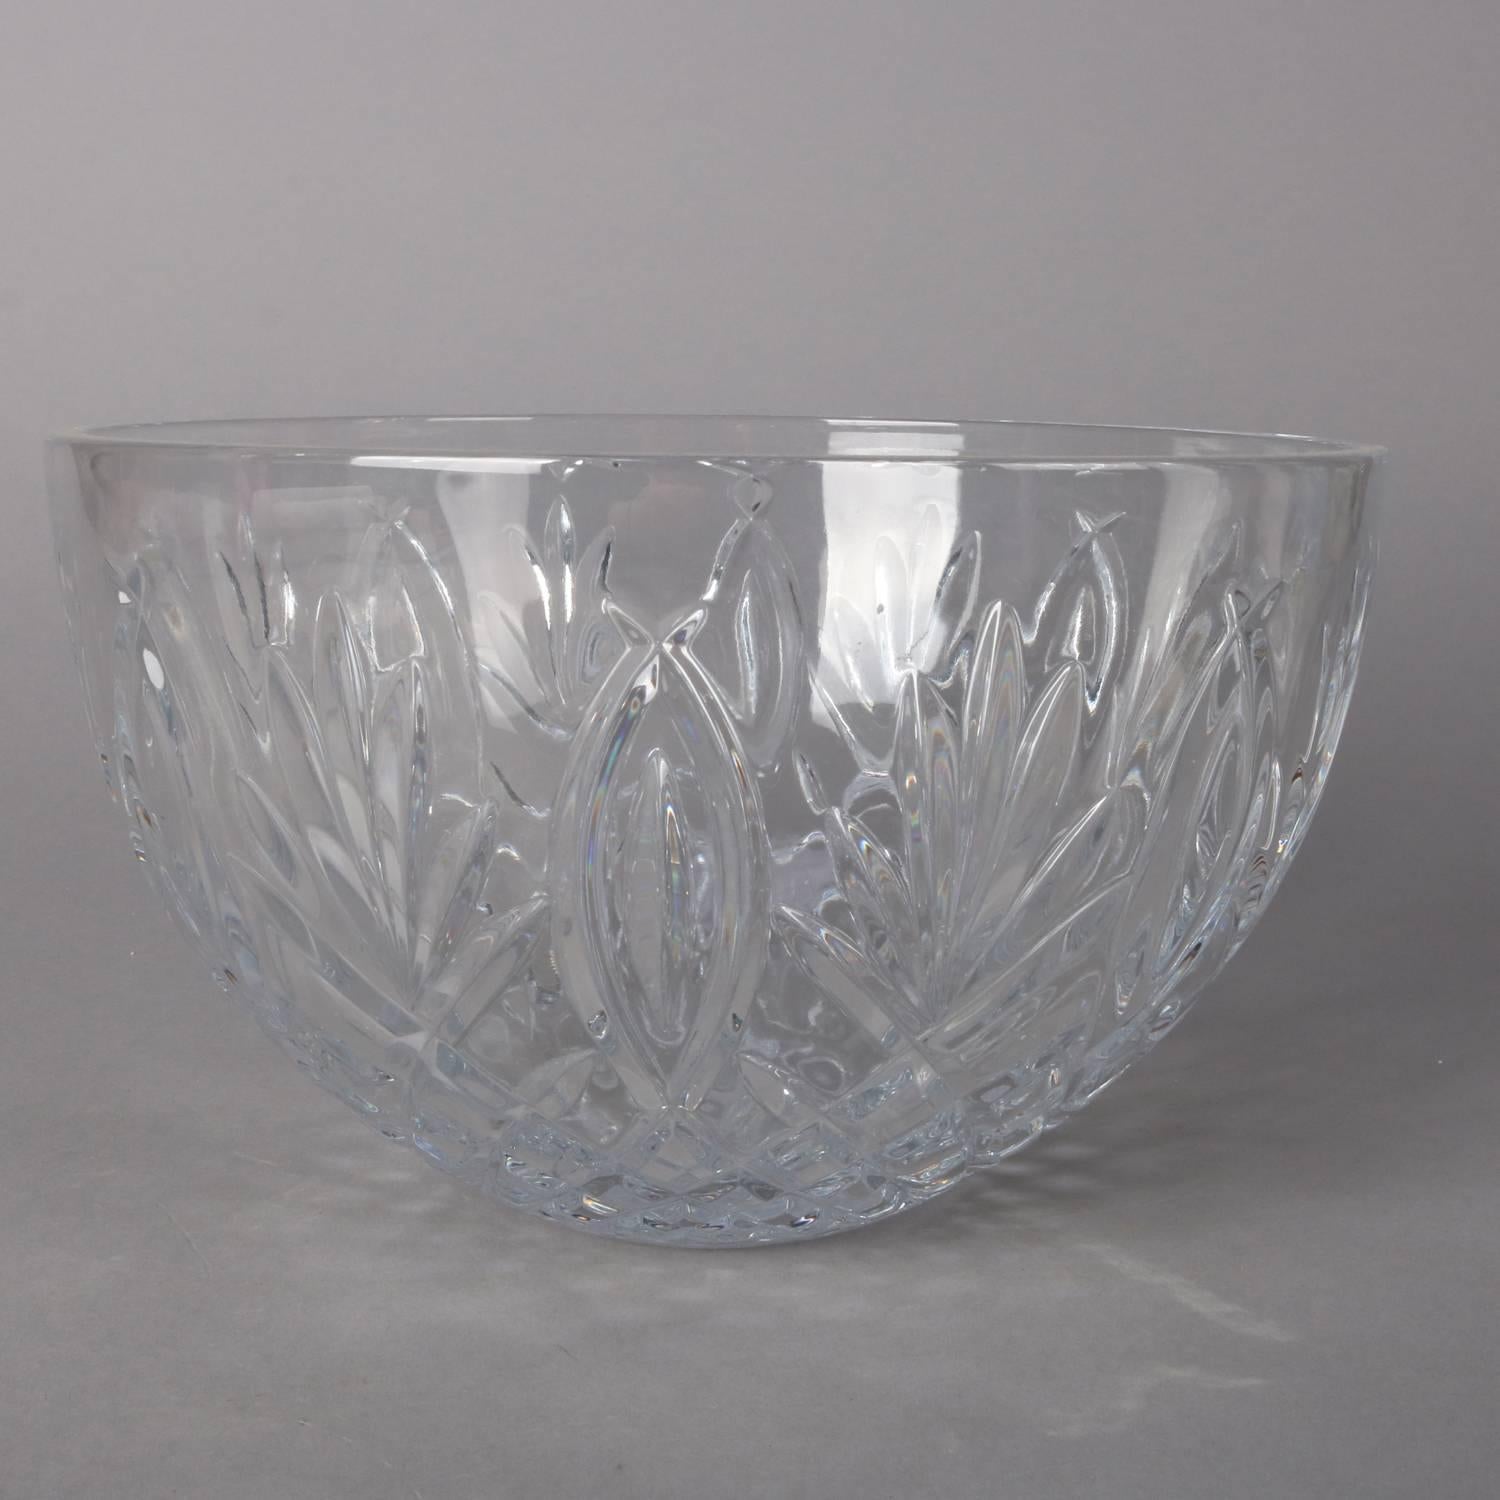 waterford crystal bowl